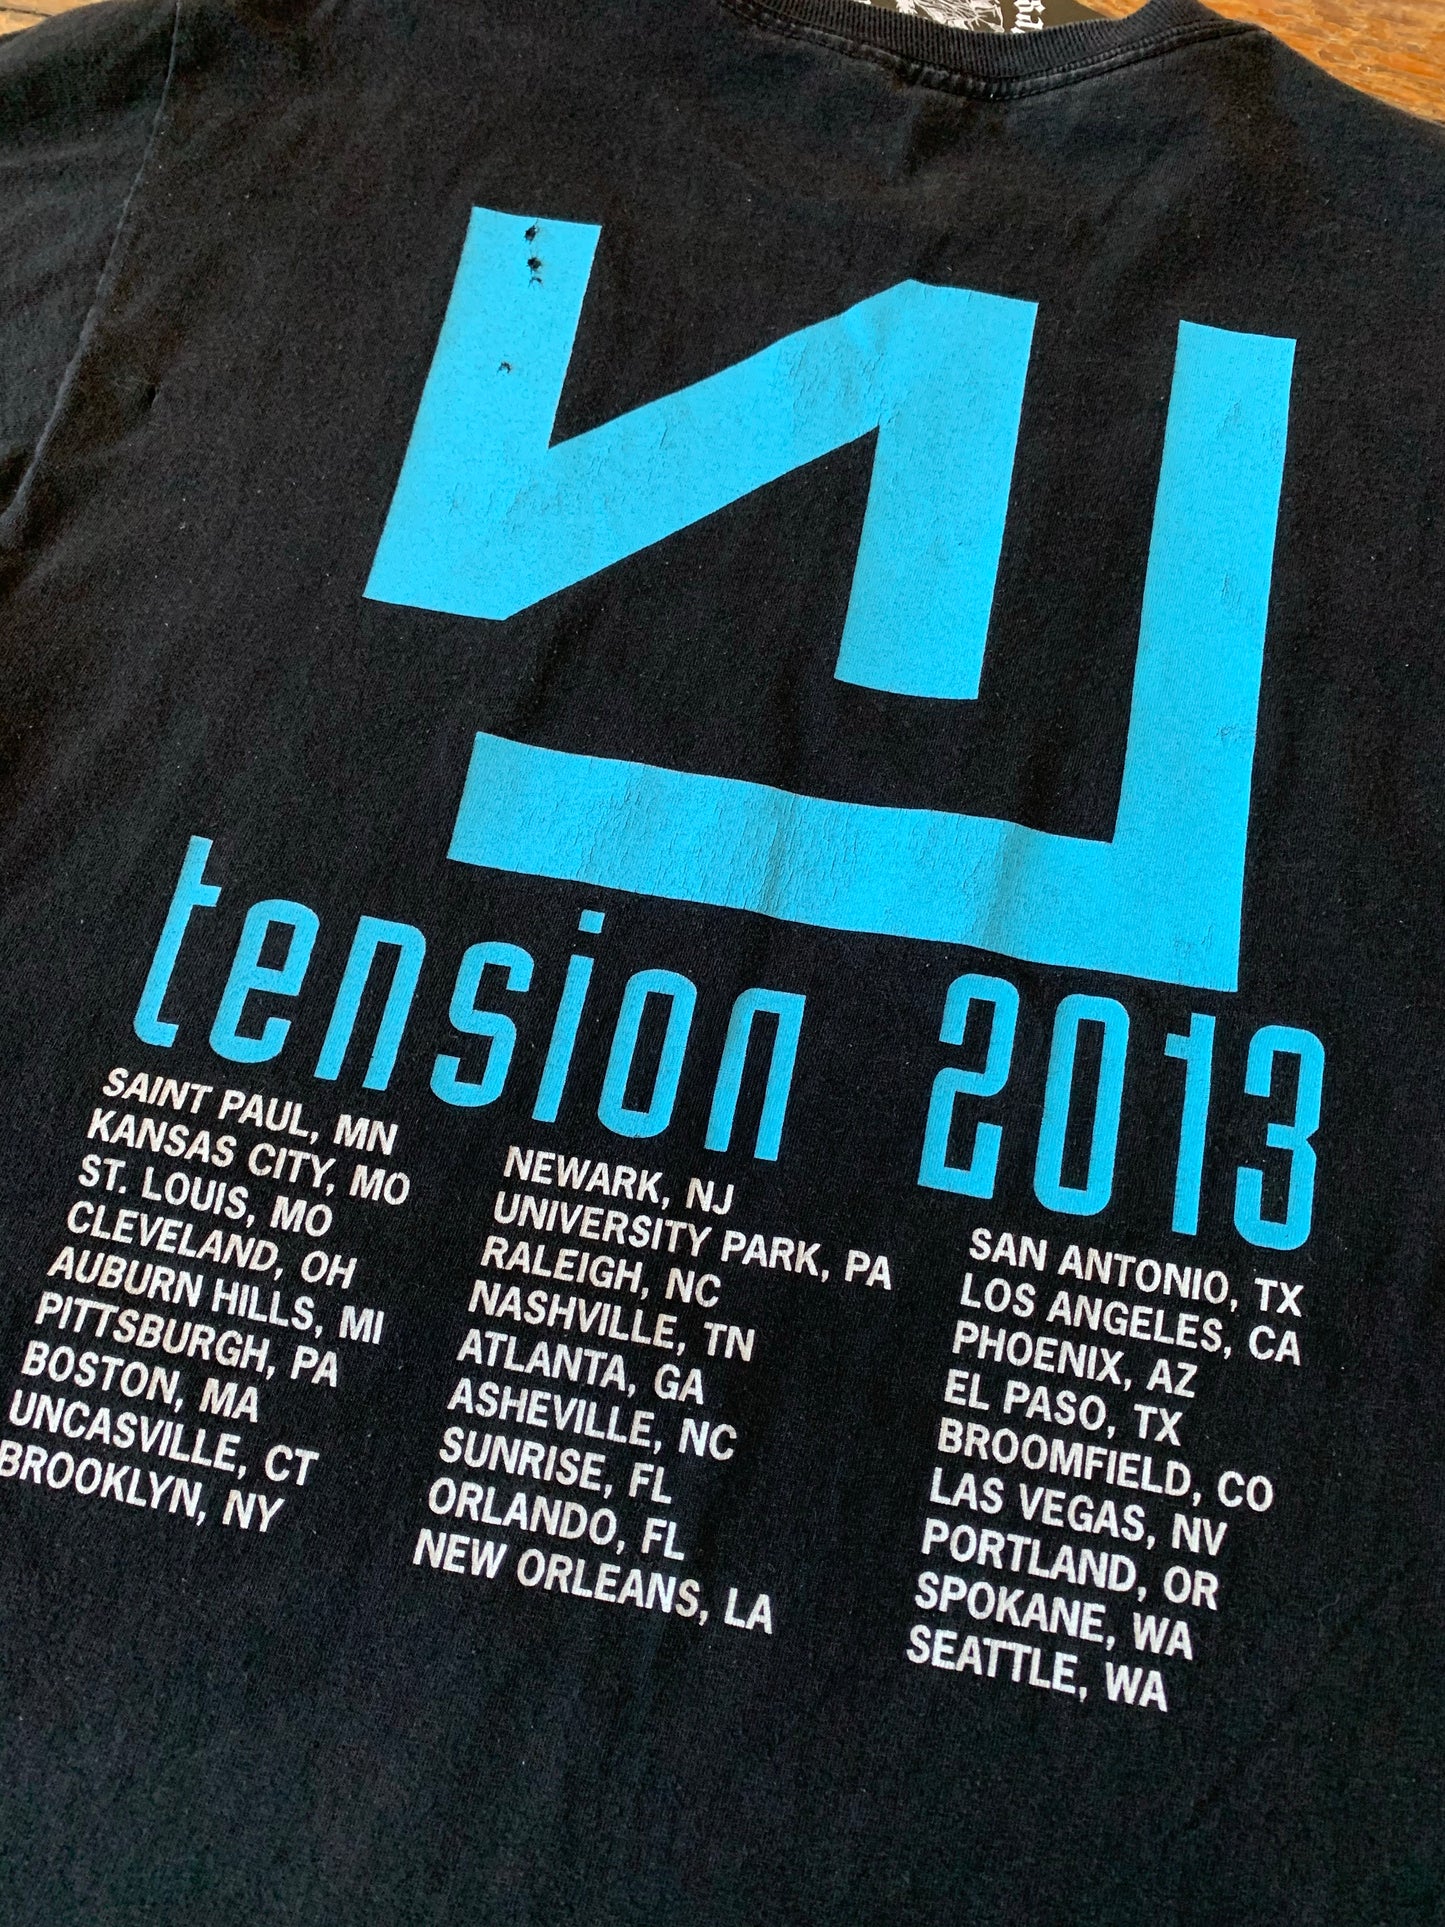 2013 Nine Inch Nails Tension Tour T-Shirt